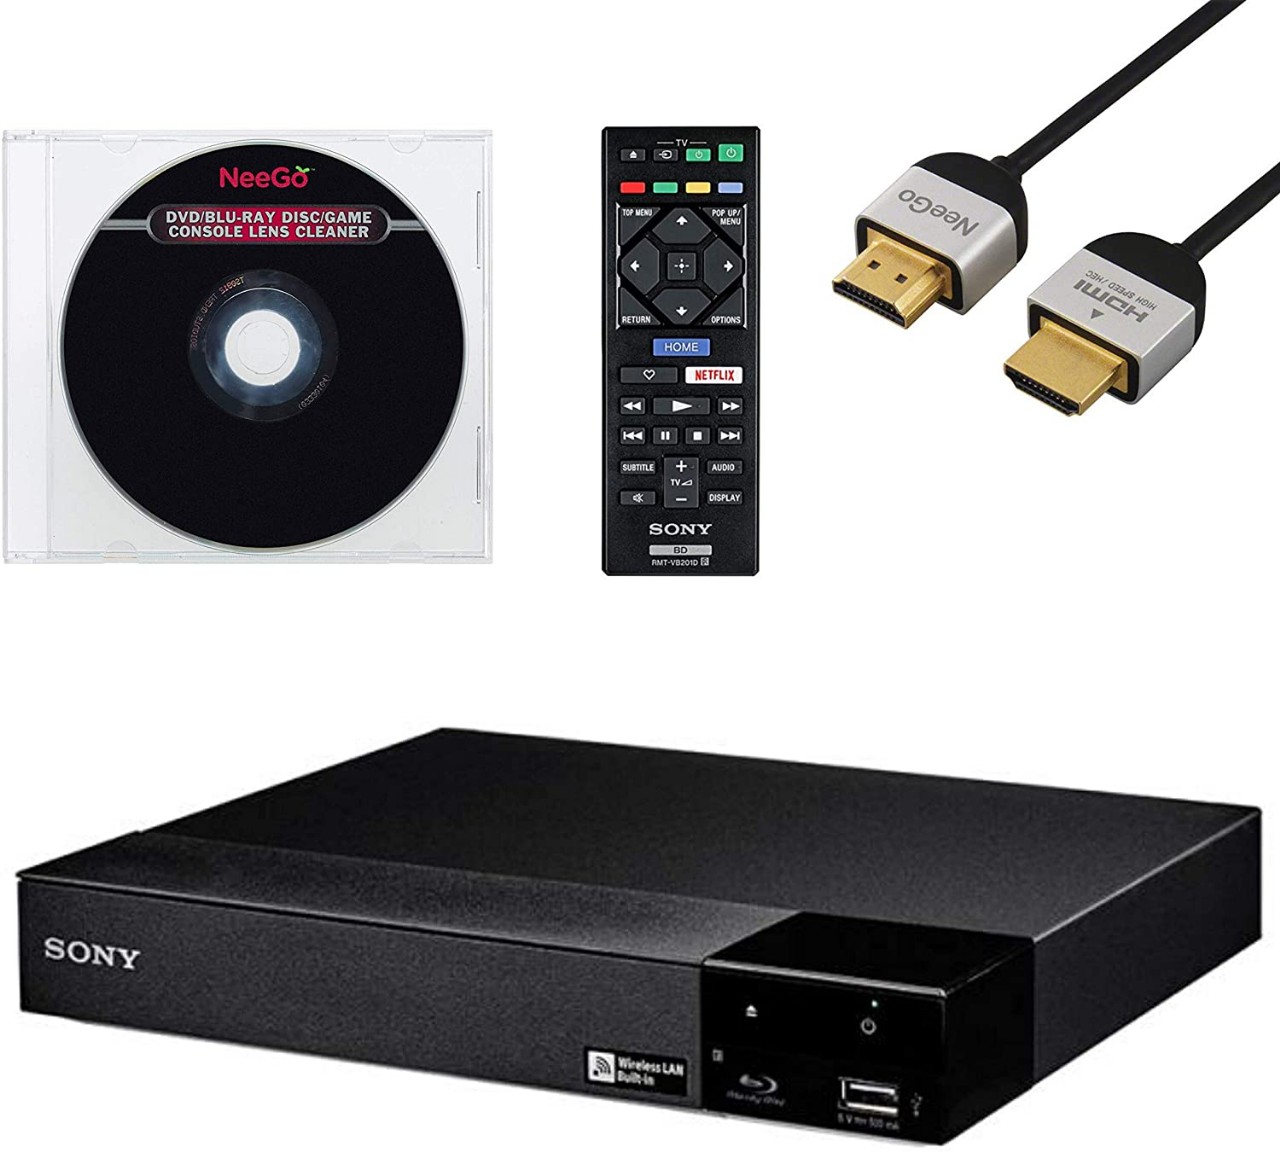 Sony BDP-S3700 - Reproductor de Blu-Ray con Wi-Fi integrado + mando a distancia + cable HDMI NeeGo